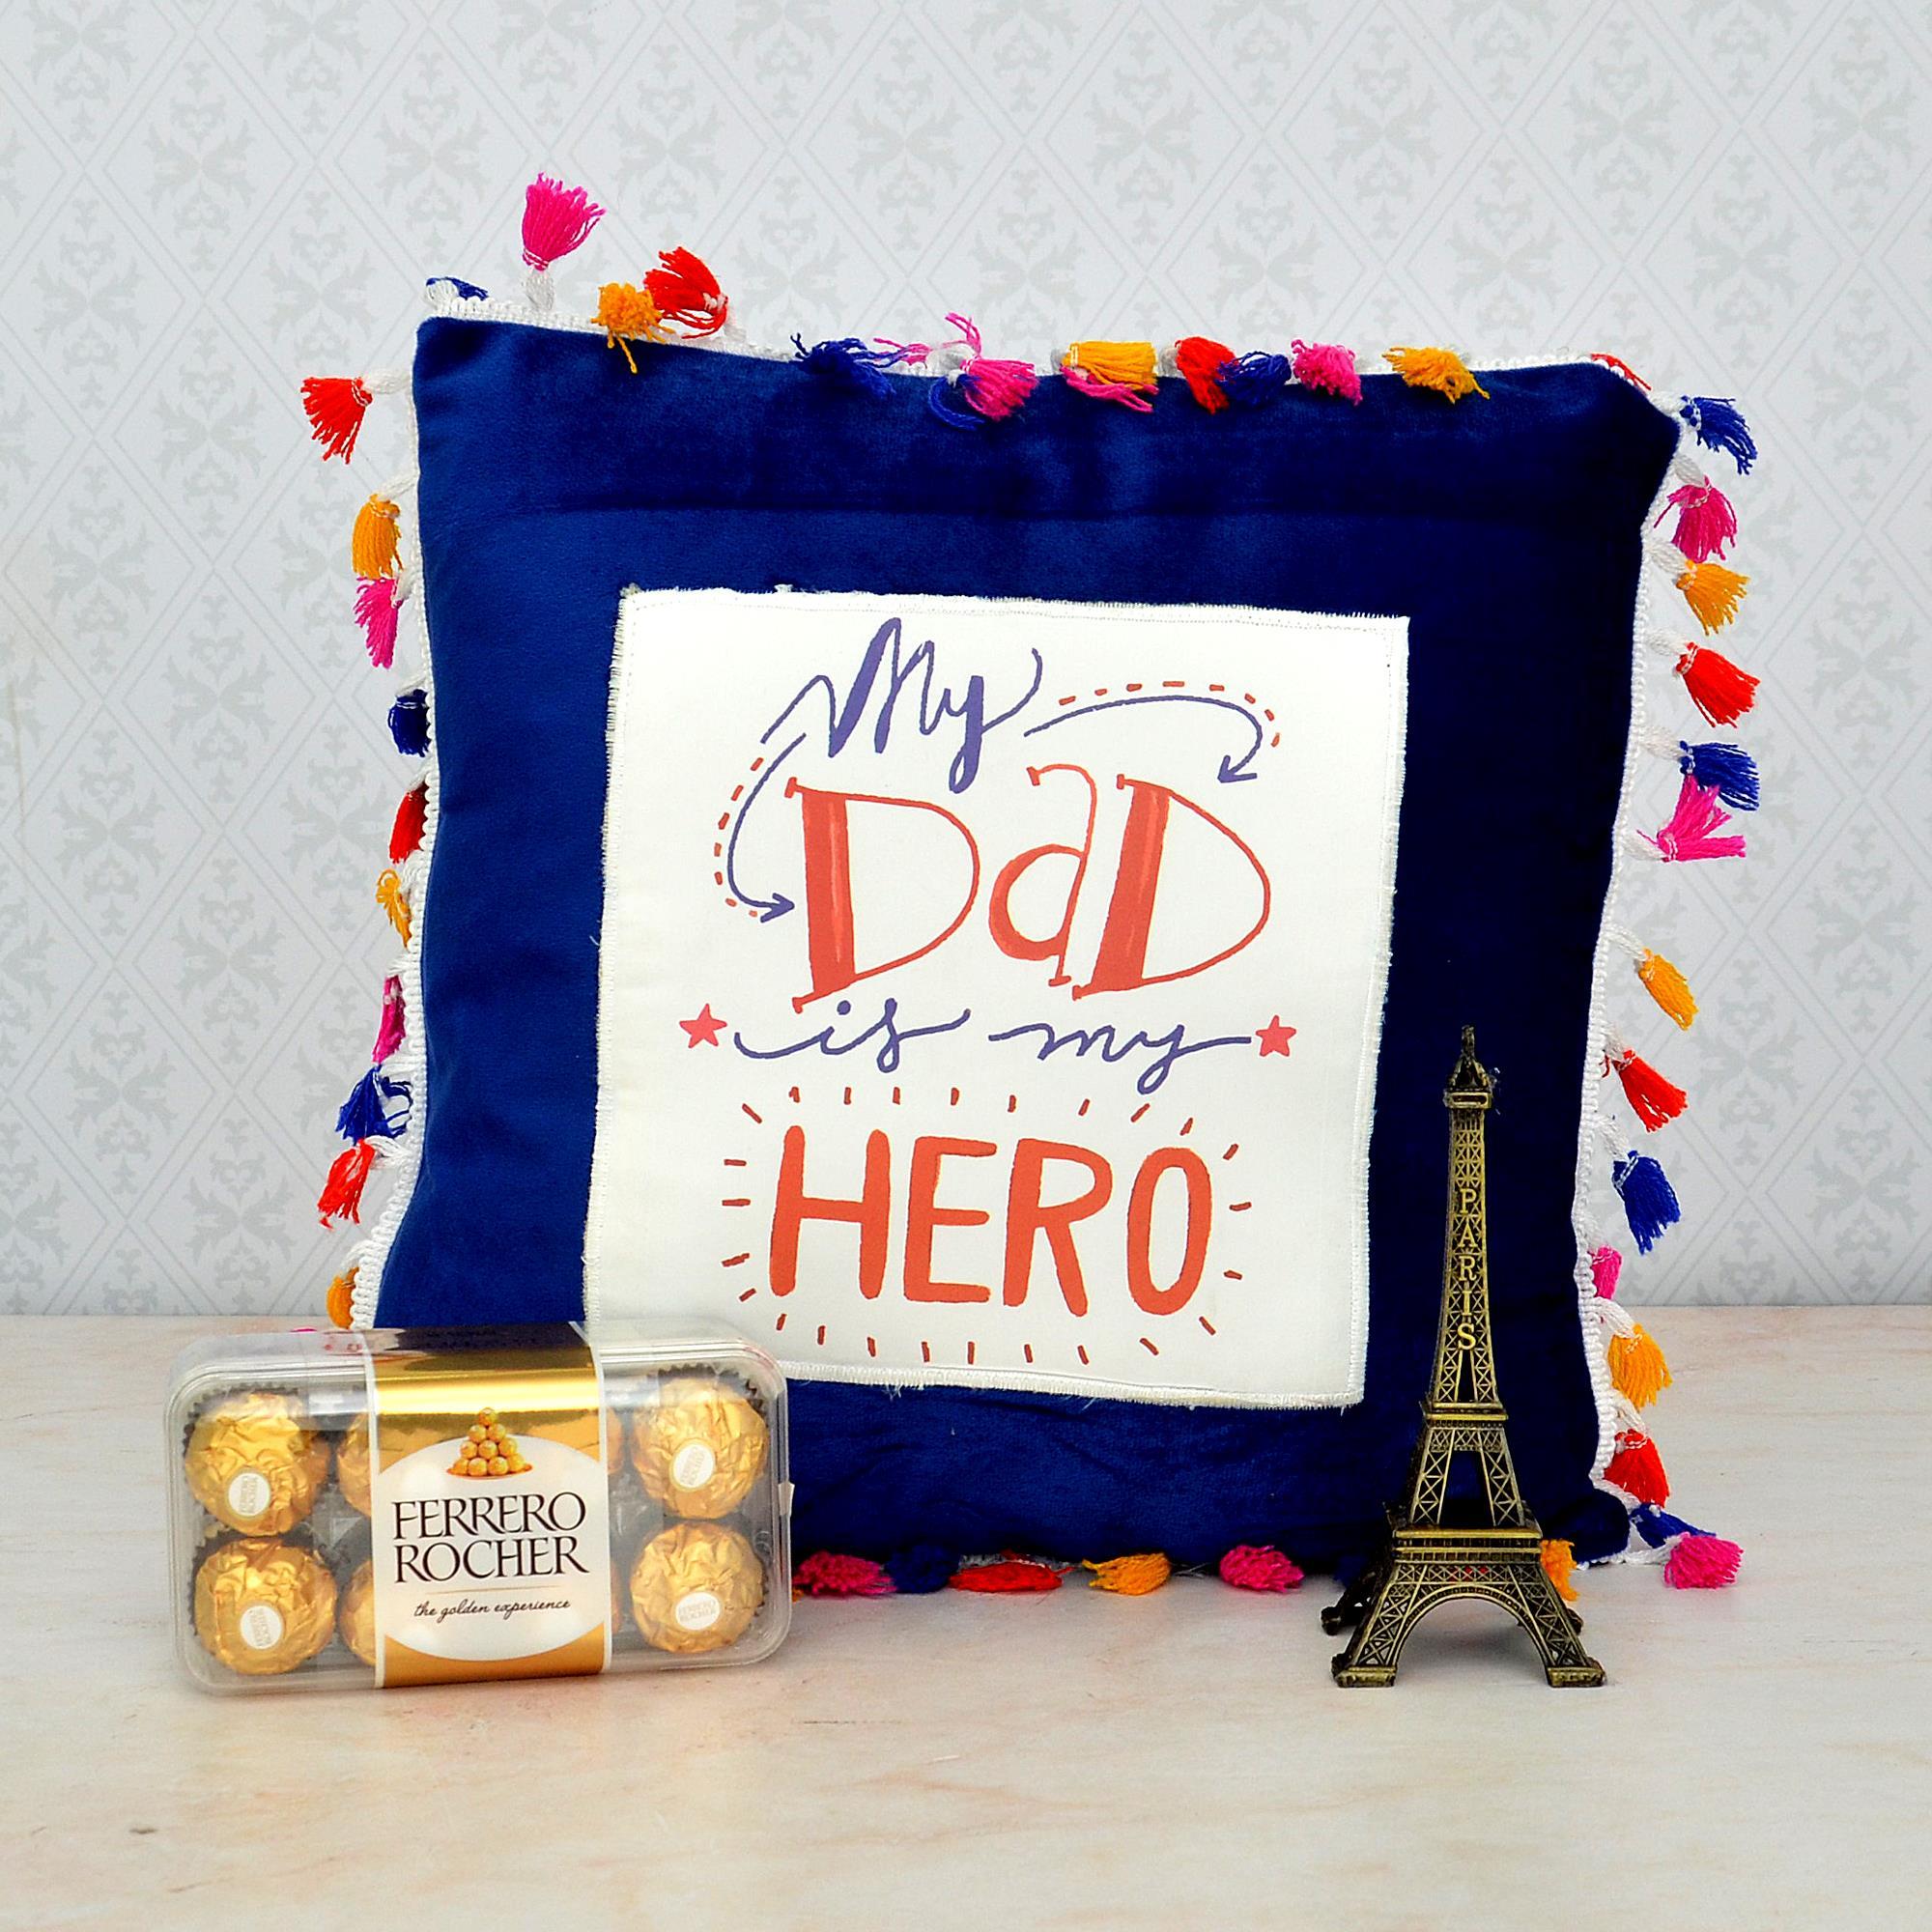 Fathers Day Pillow & Ferrero Rocher